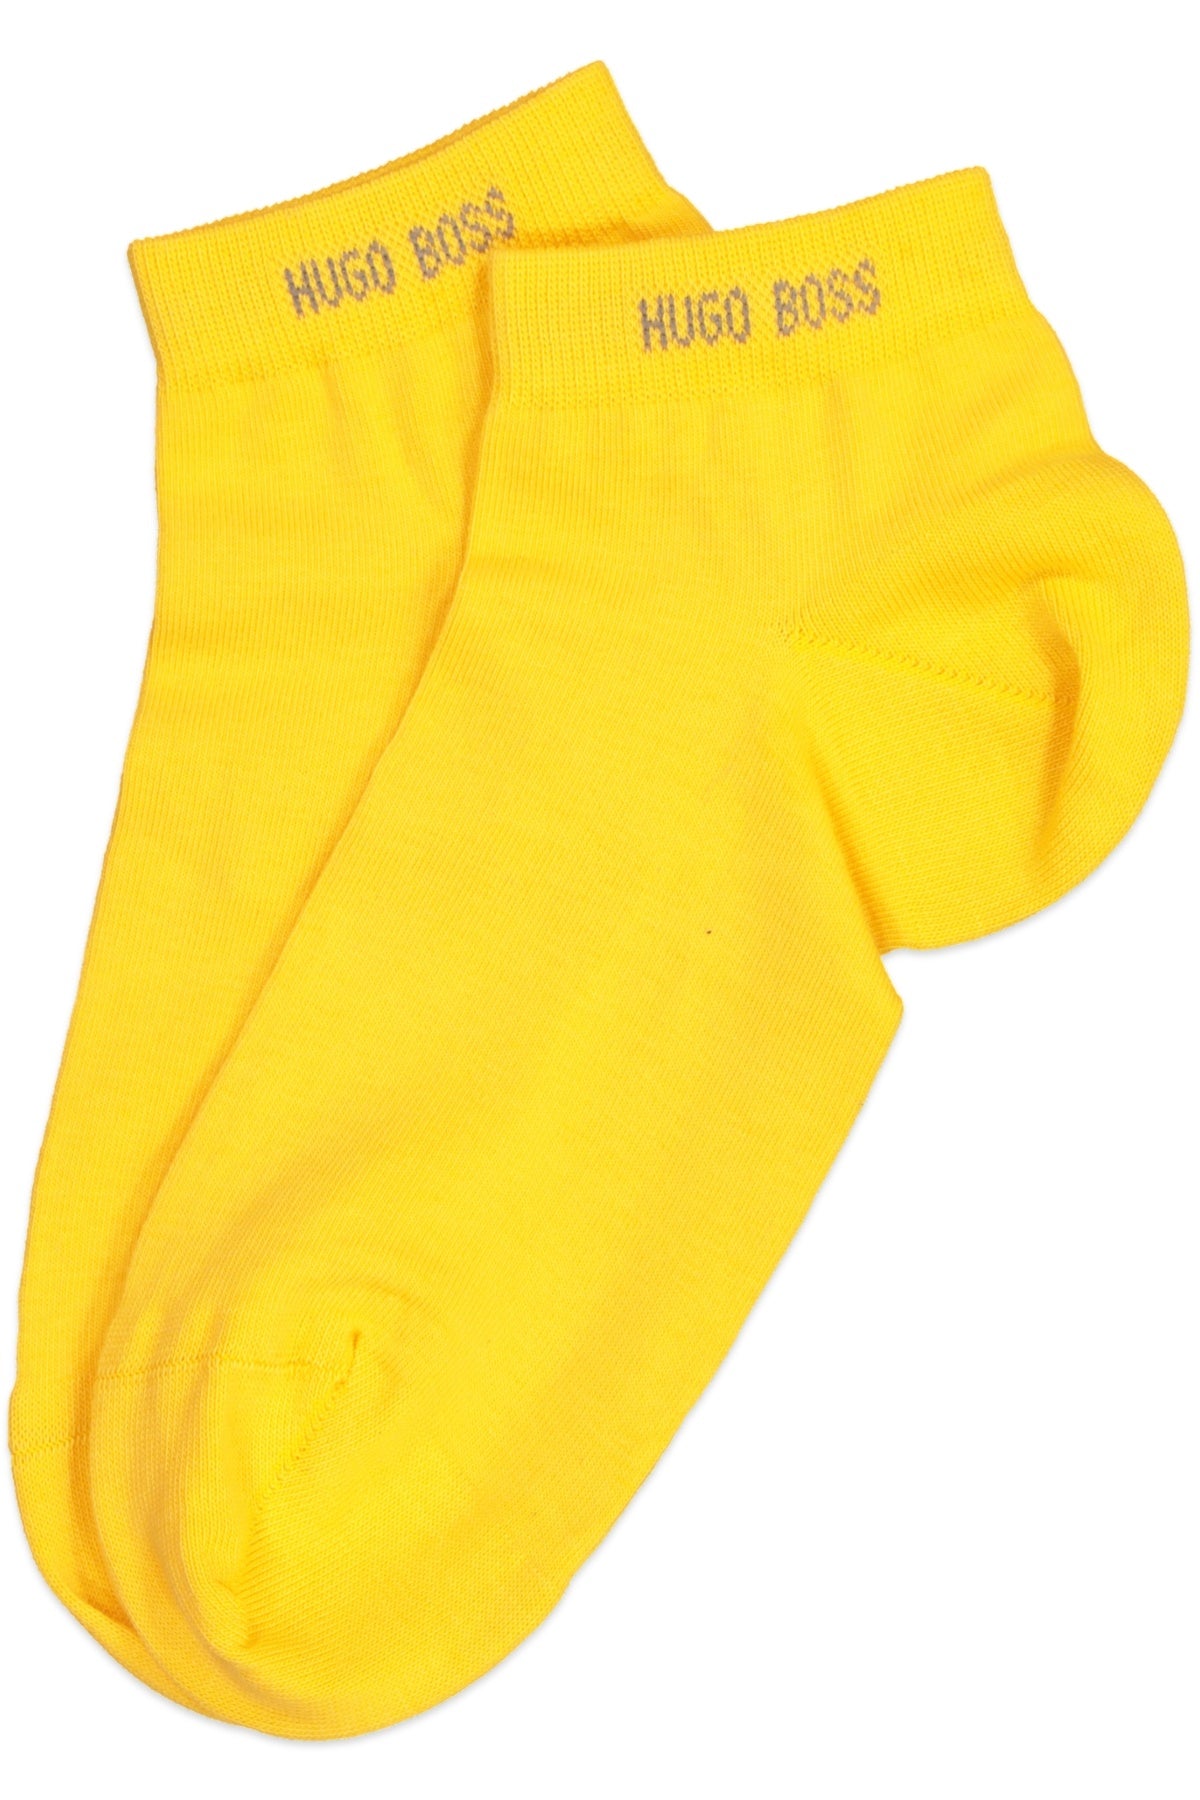 Hugo Boss Yellow Marc Low-Cut Sneaker Socks